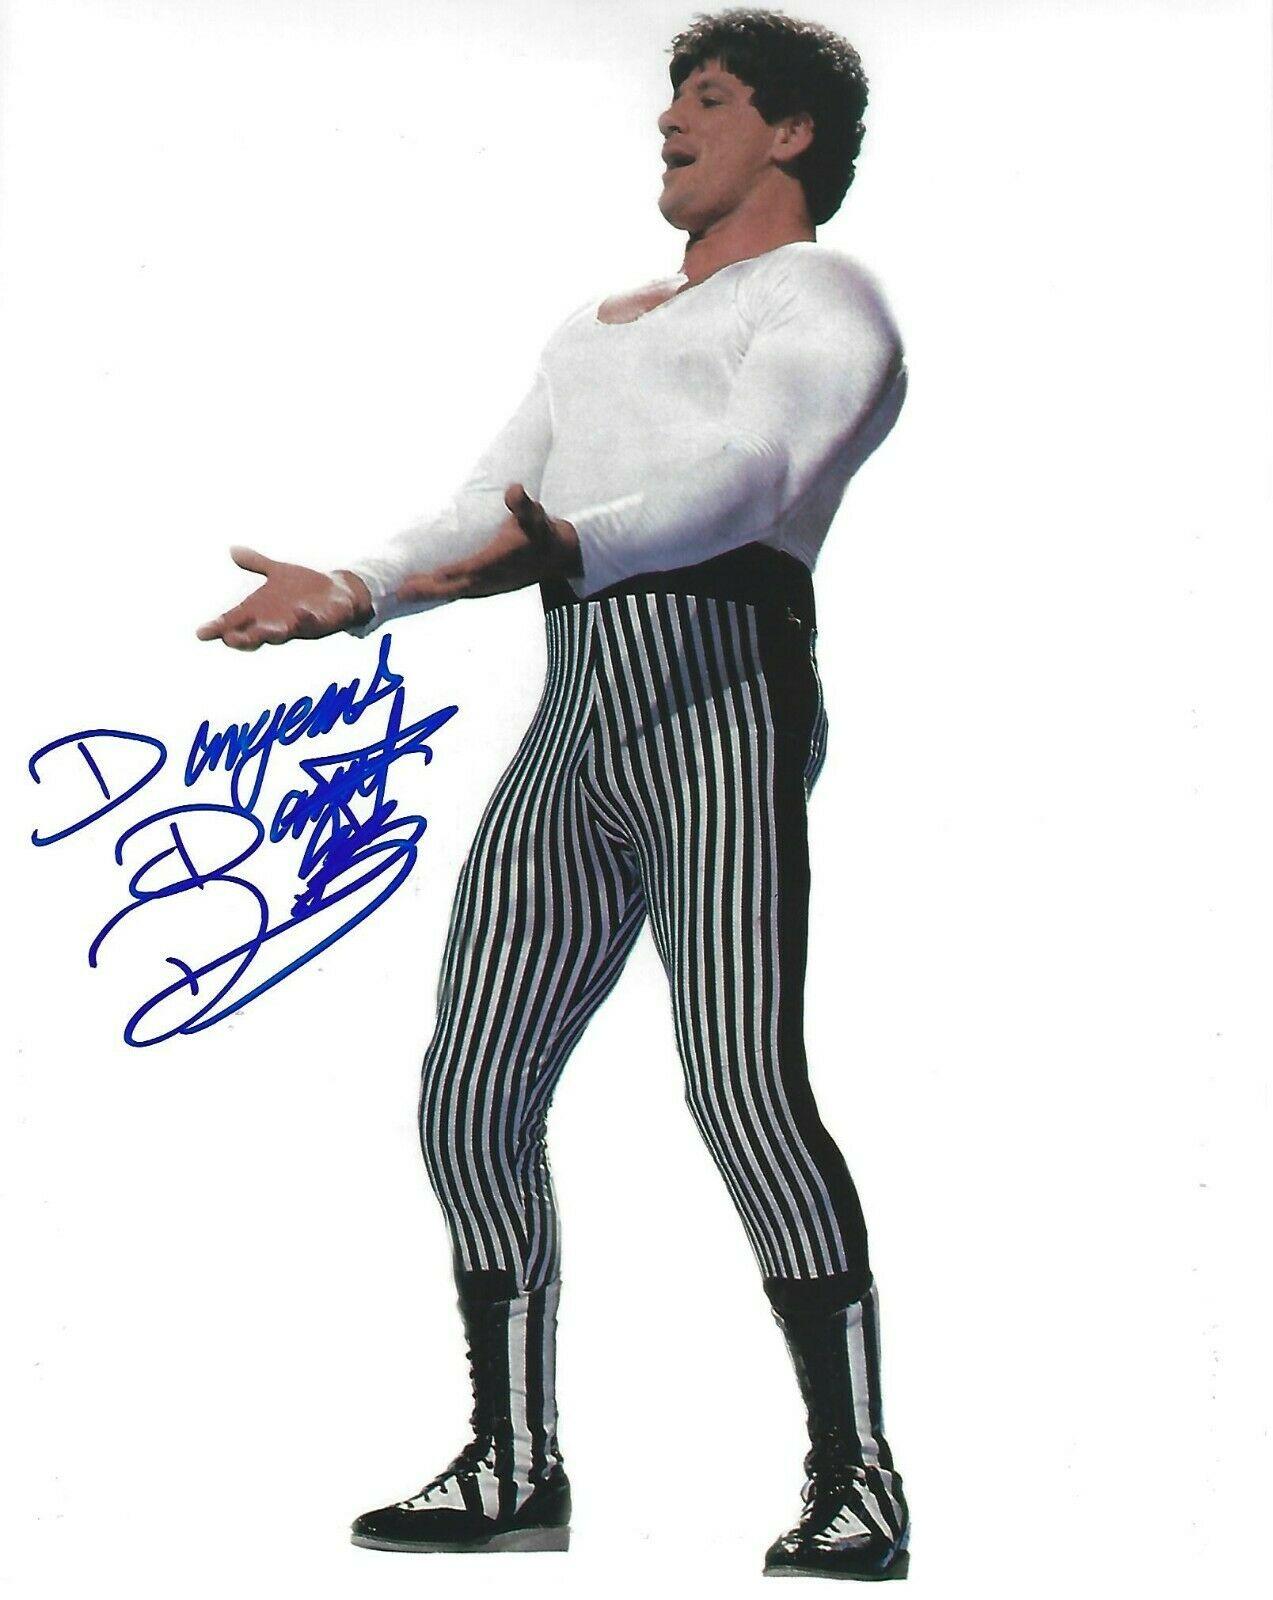 DAVID HART SMITH WWE SIGNED AUTOGRAPH 8X10 PHOTO 